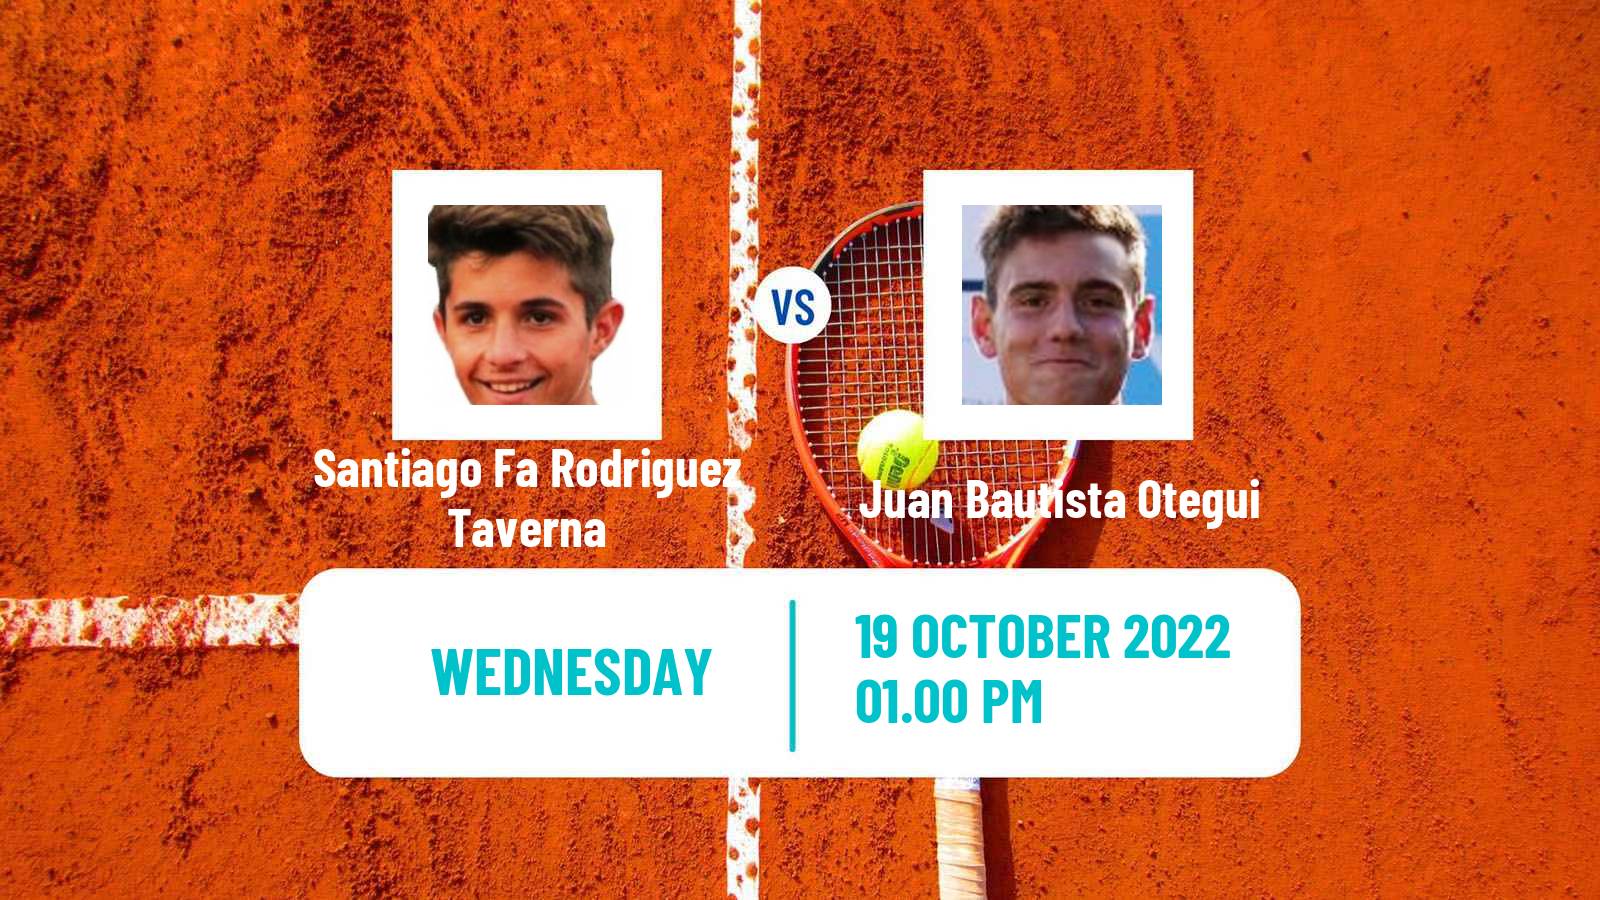 Tennis ATP Challenger Santiago Fa Rodriguez Taverna - Juan Bautista Otegui